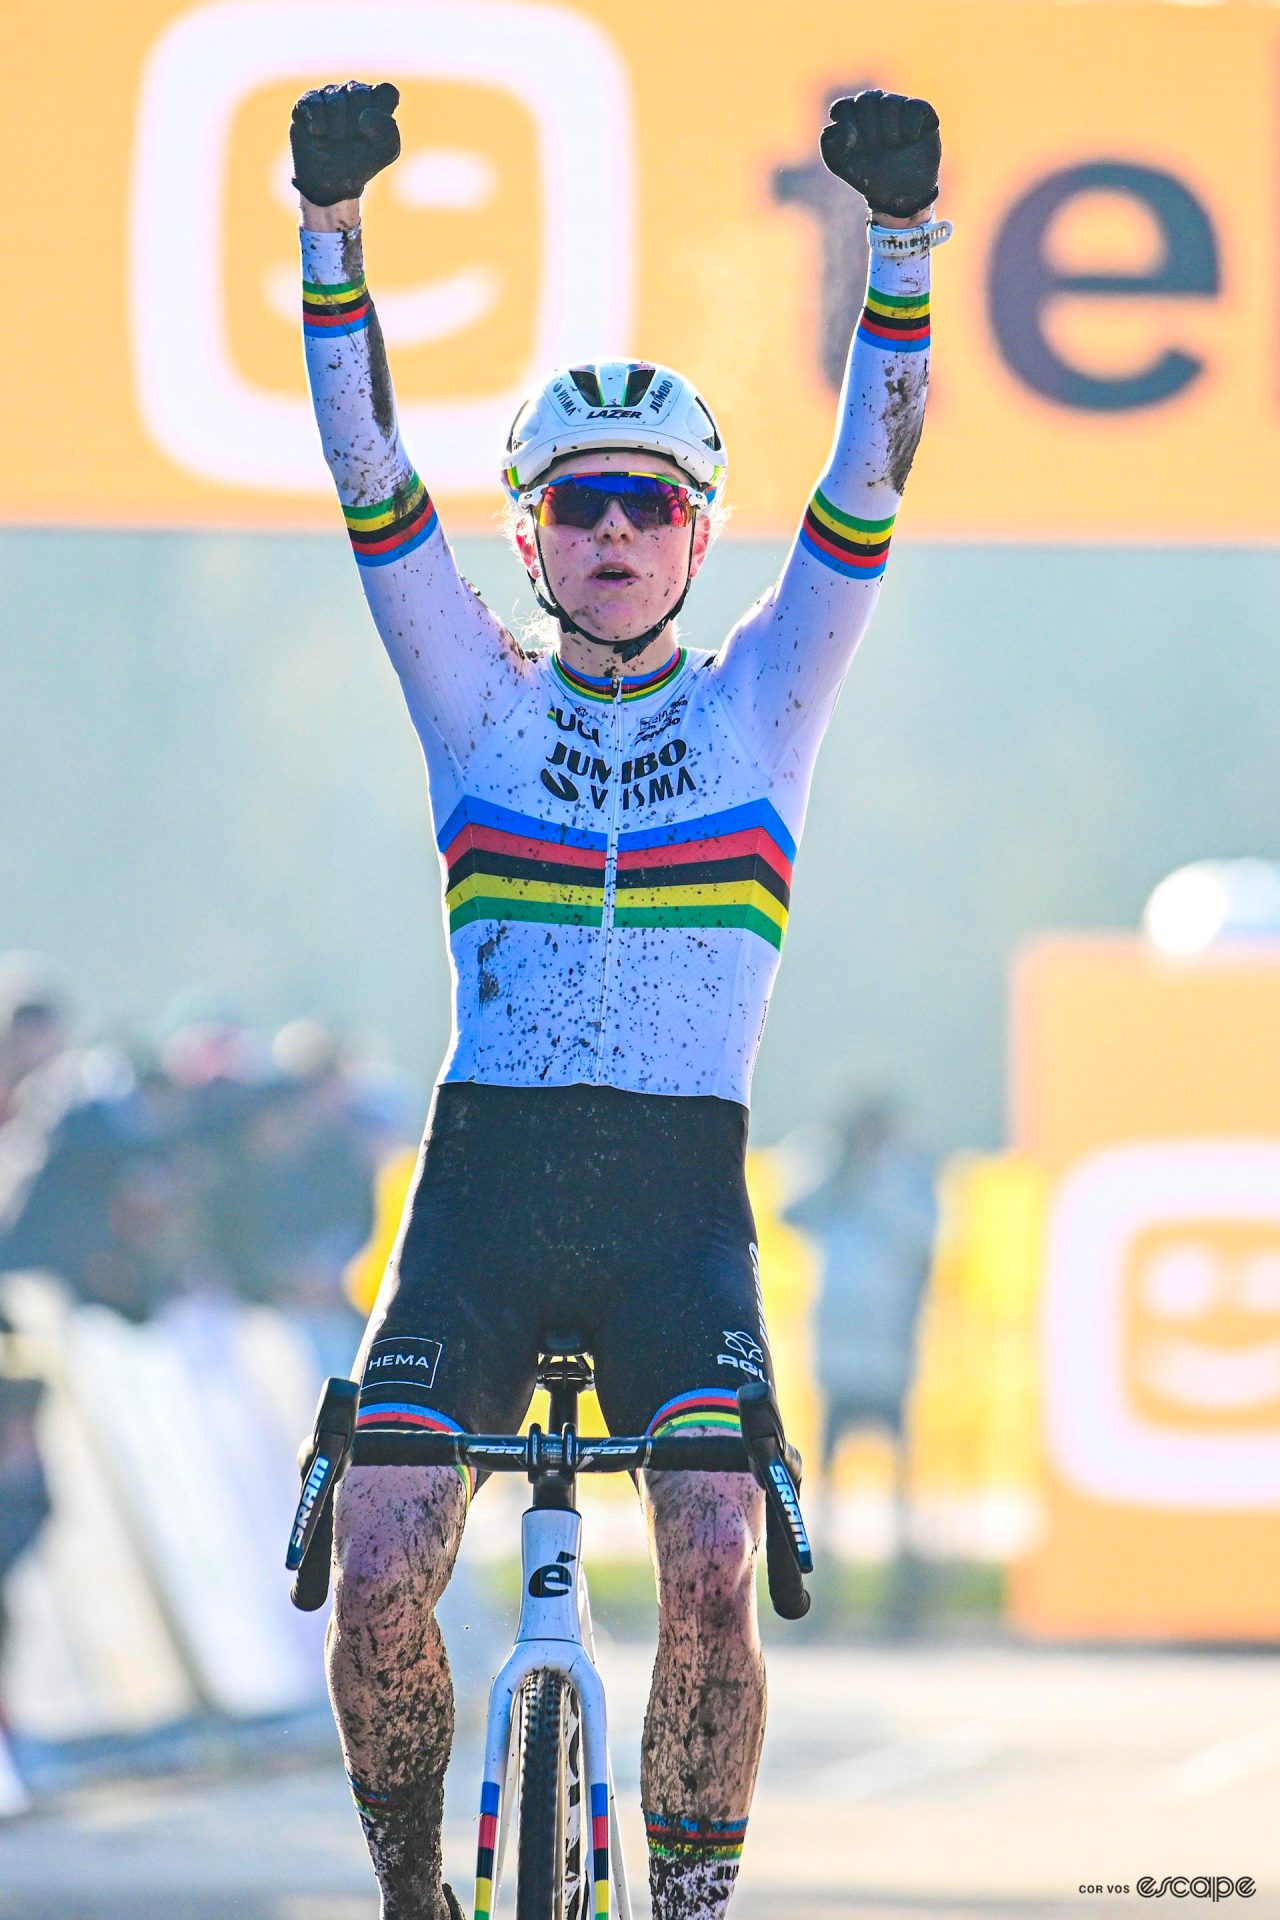 World champion Fem van Empel celebrates winning Cyclocross Superprestige Boom with both fists in the air.